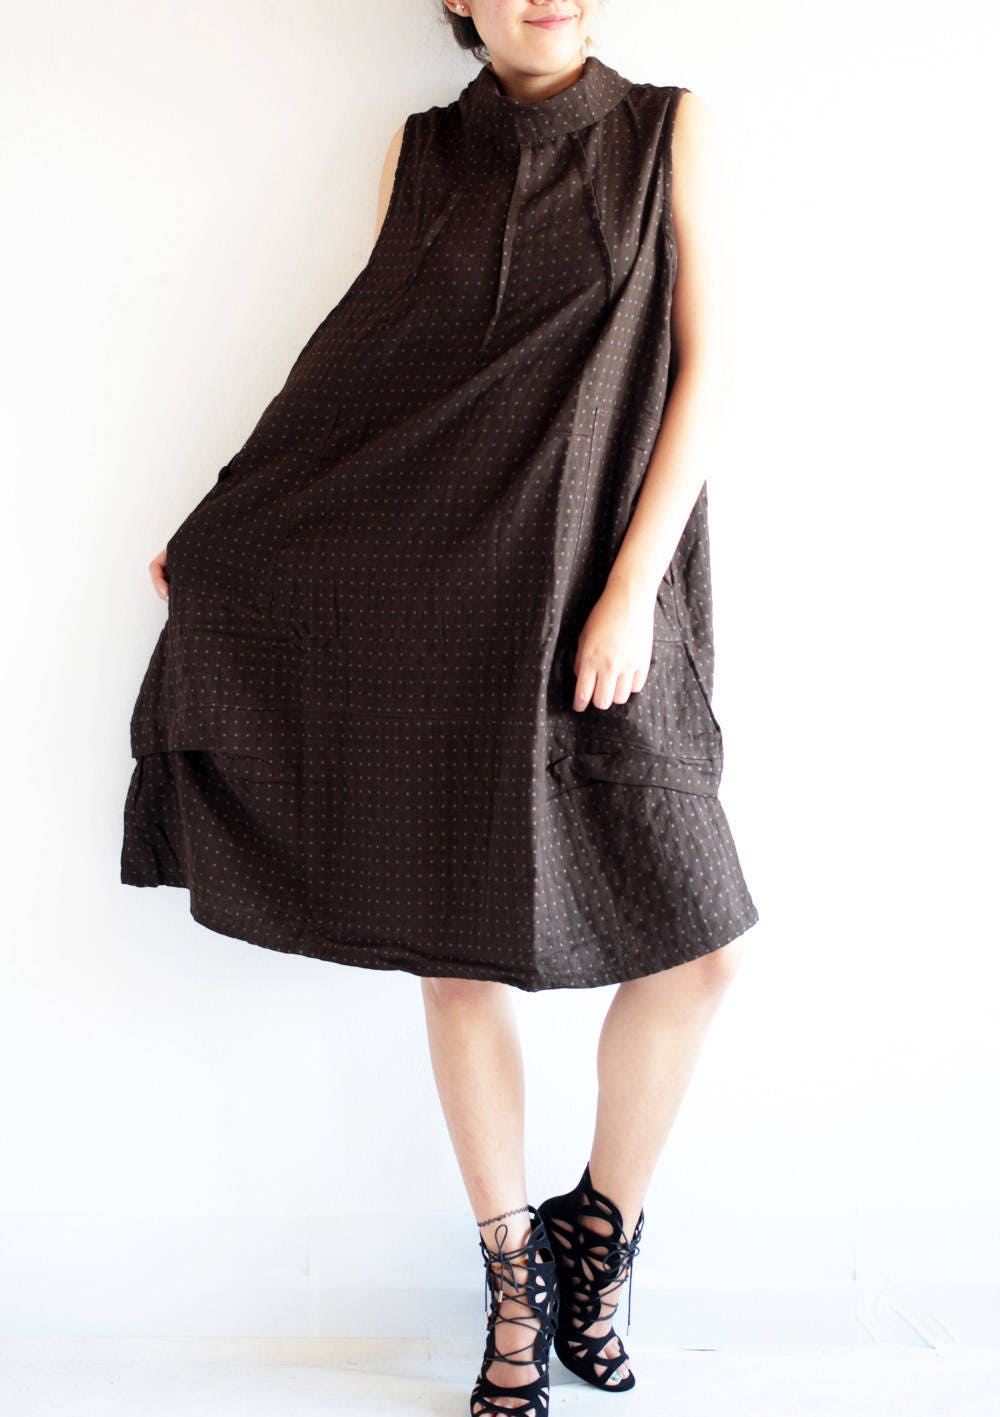 Turtle Neck Dress / Sleeveless Dress 1403 Dot printed | Etsy